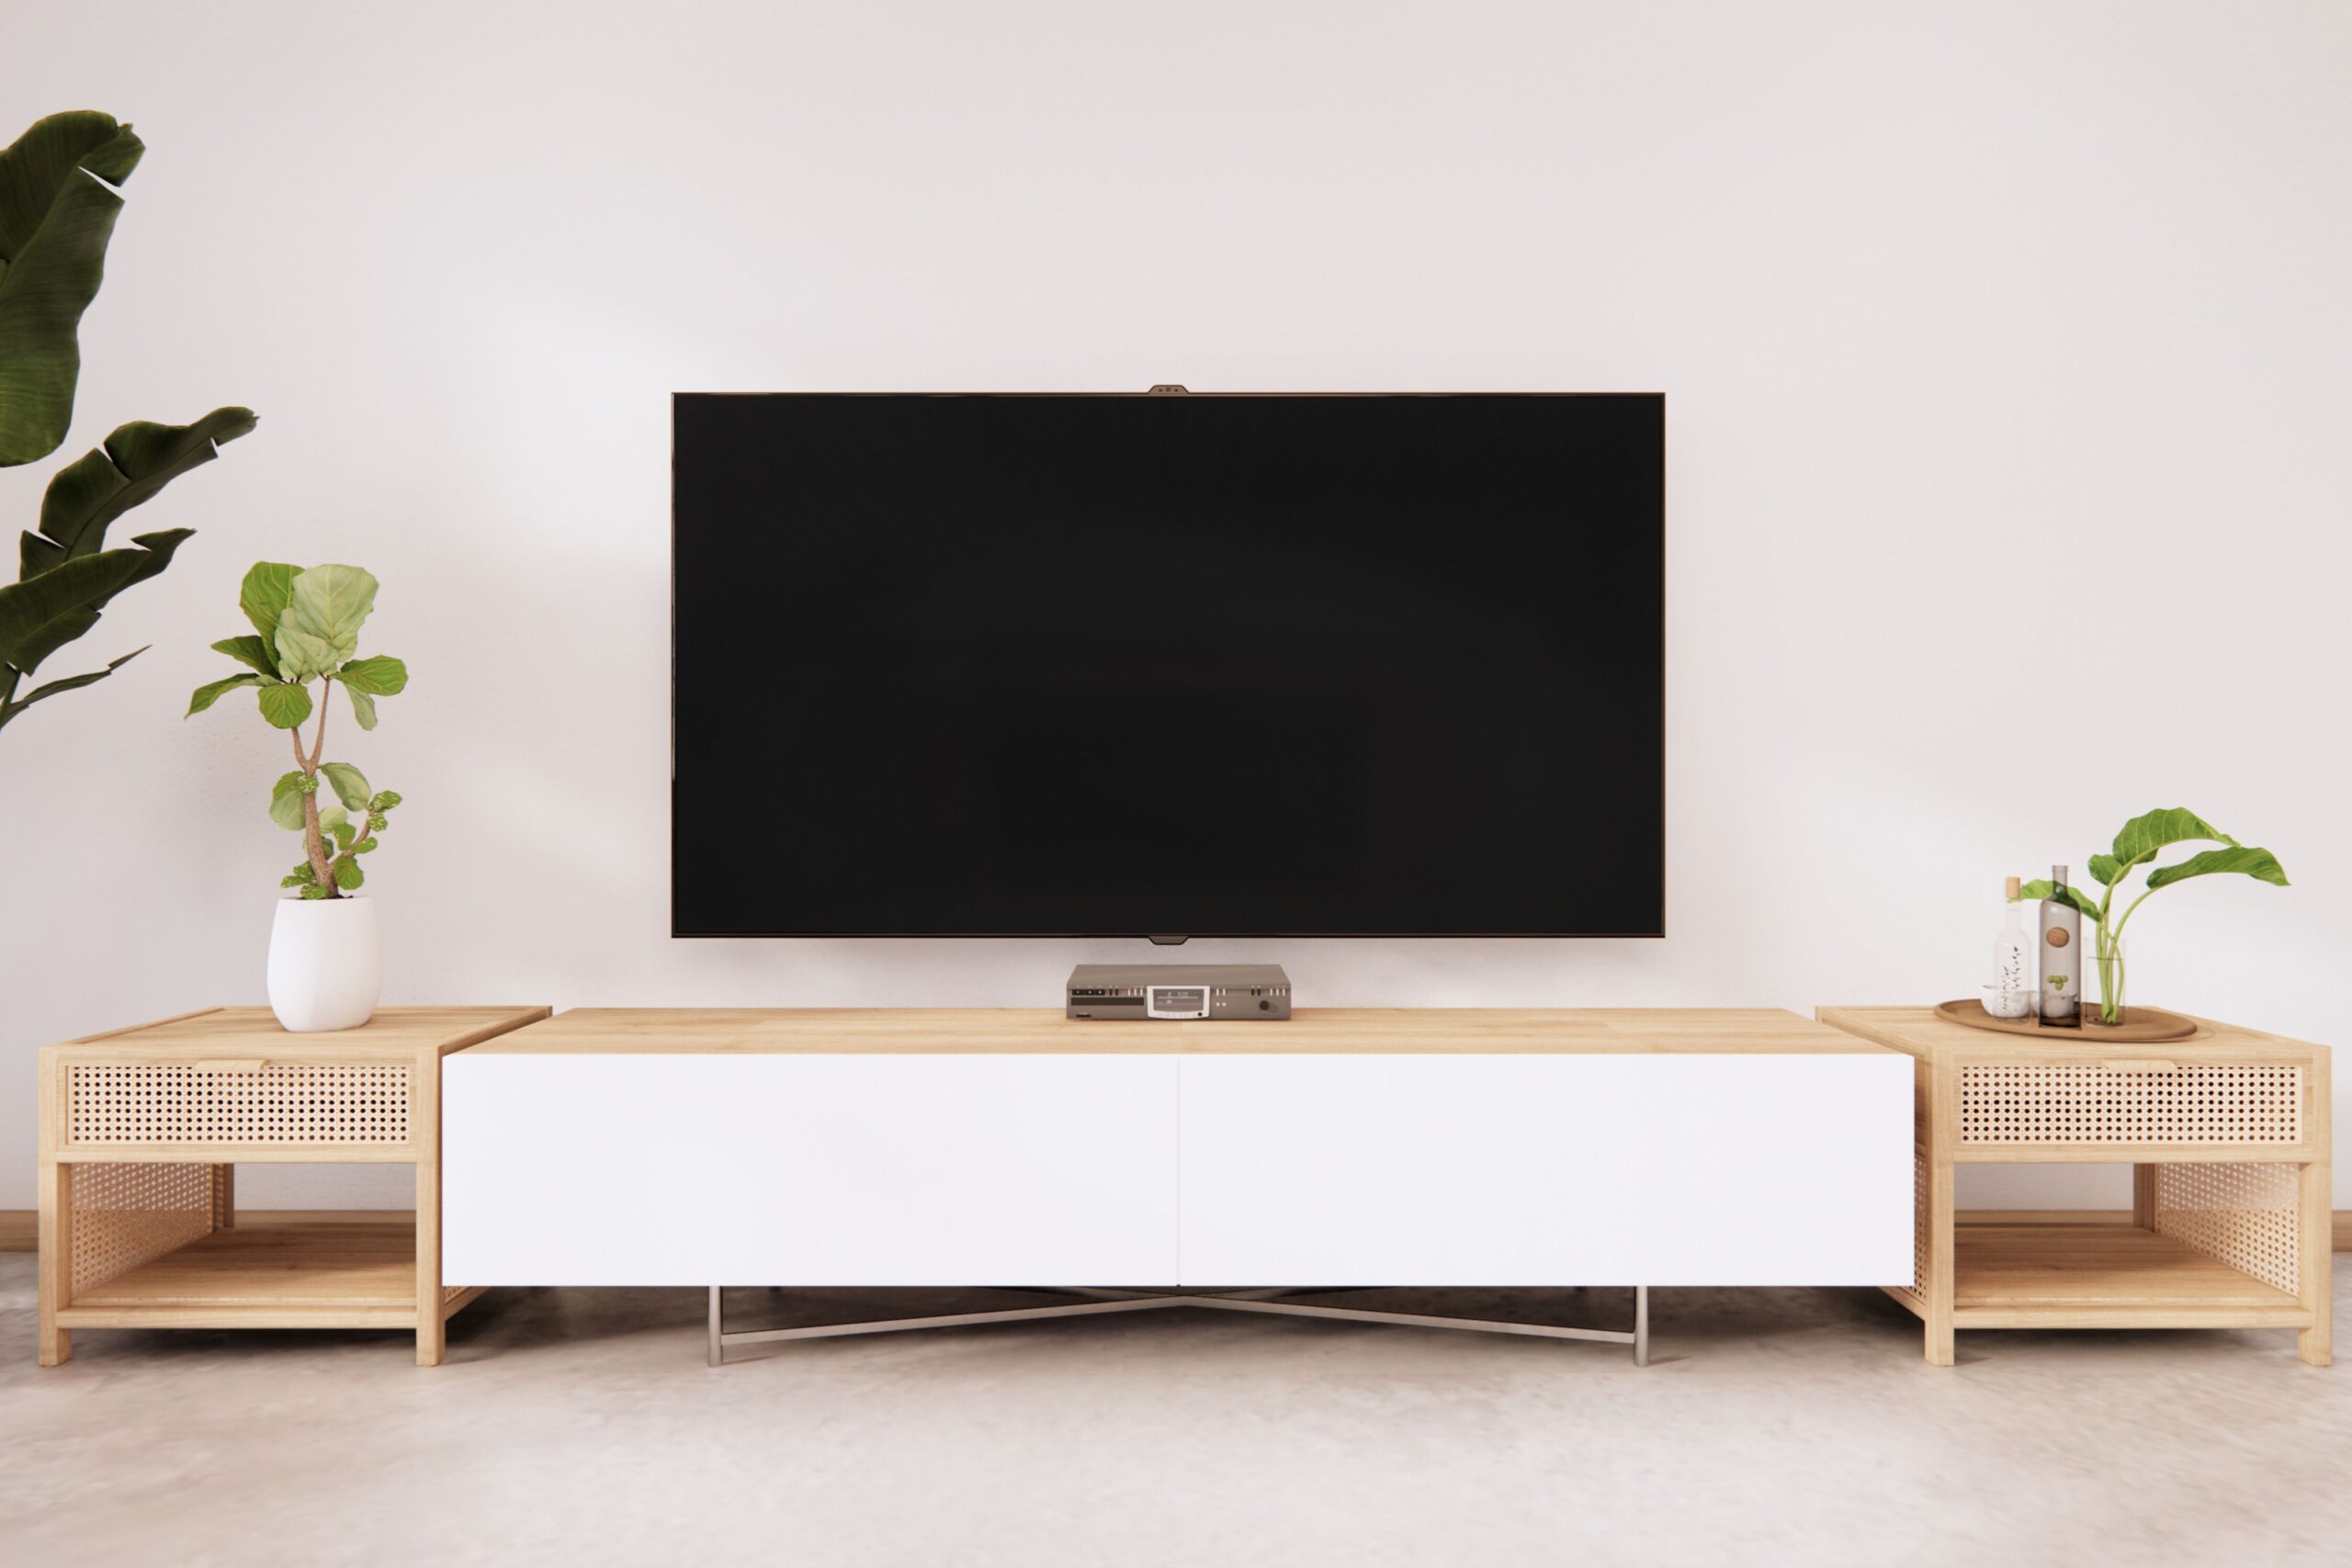 Hotel TV cabinet design